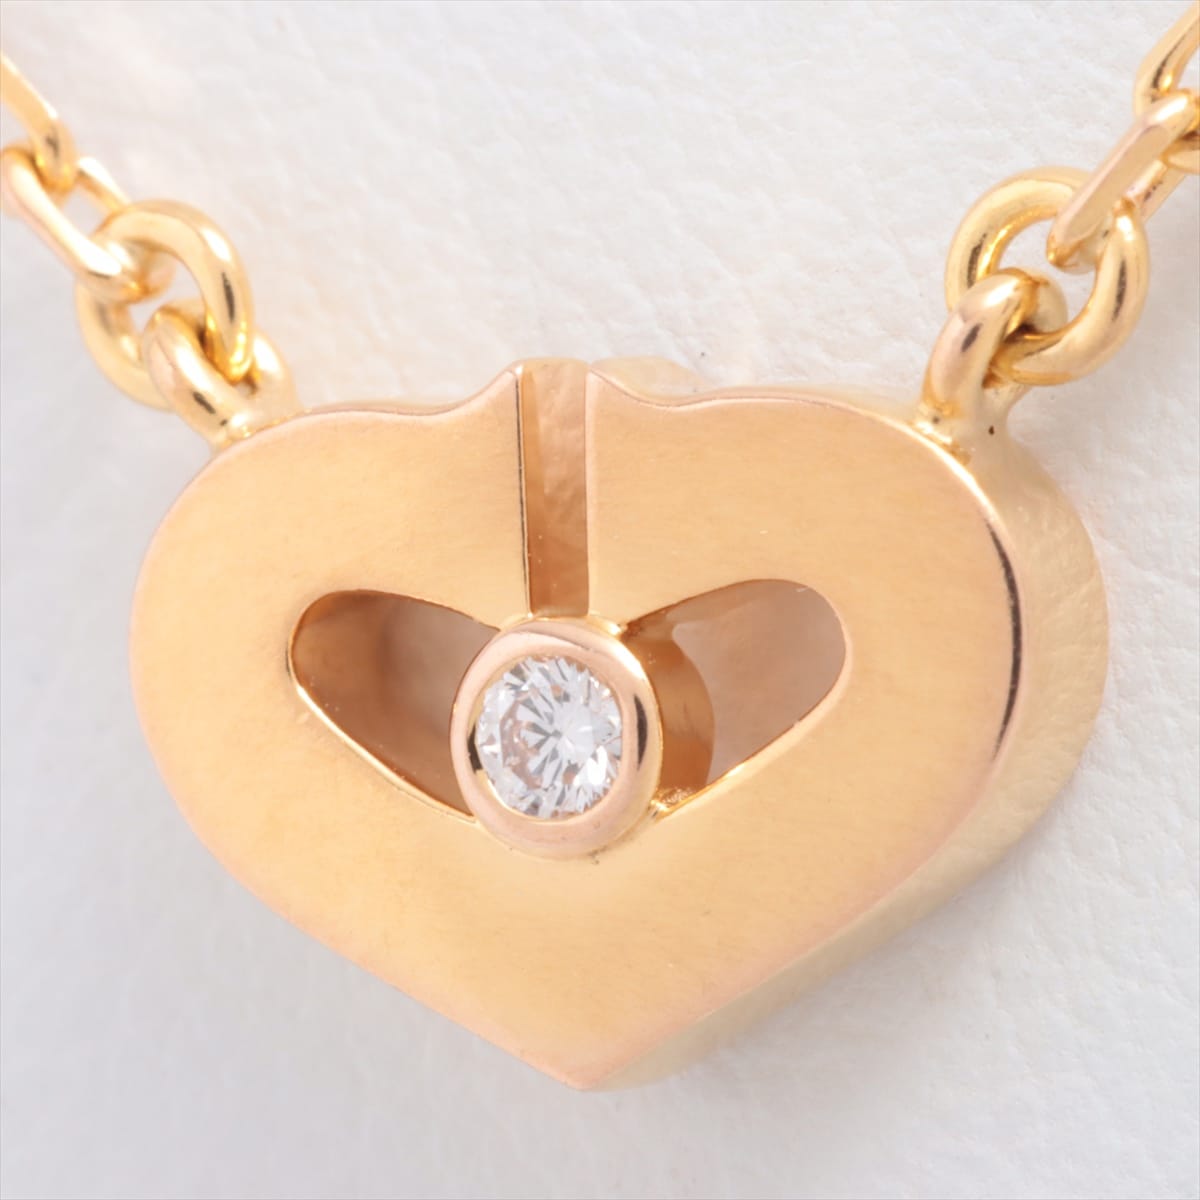 Cartier C Heart 1P diamond Necklace 750 YG 4.2g